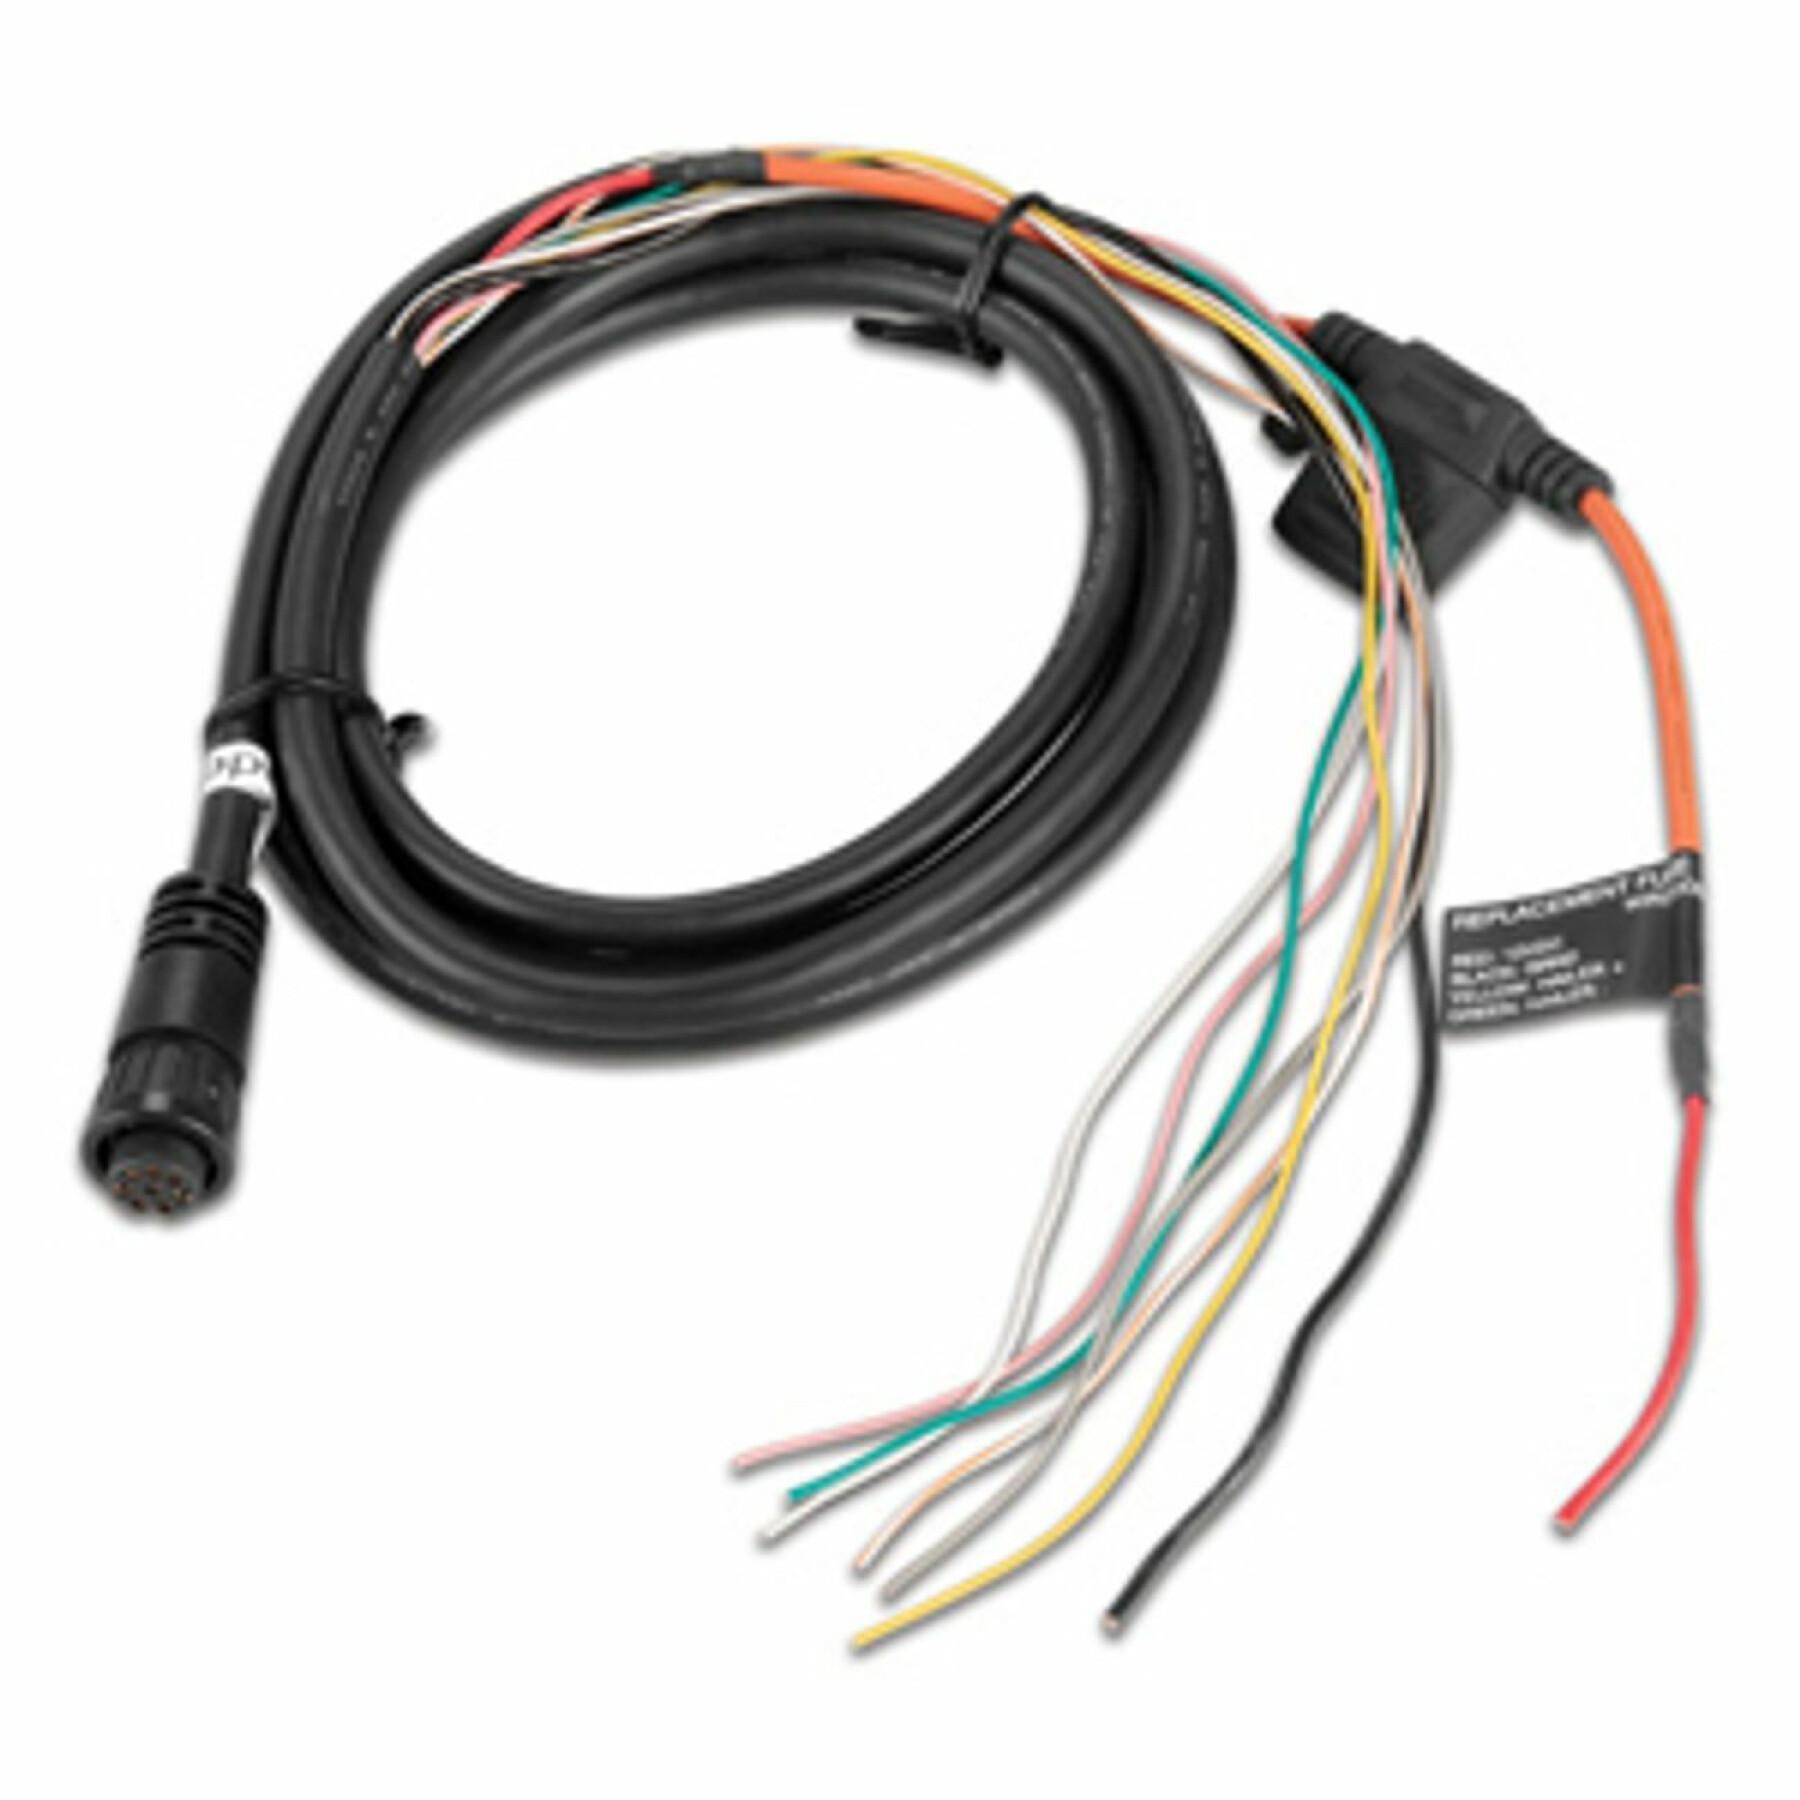 Cable Garmin nmea 0183 power